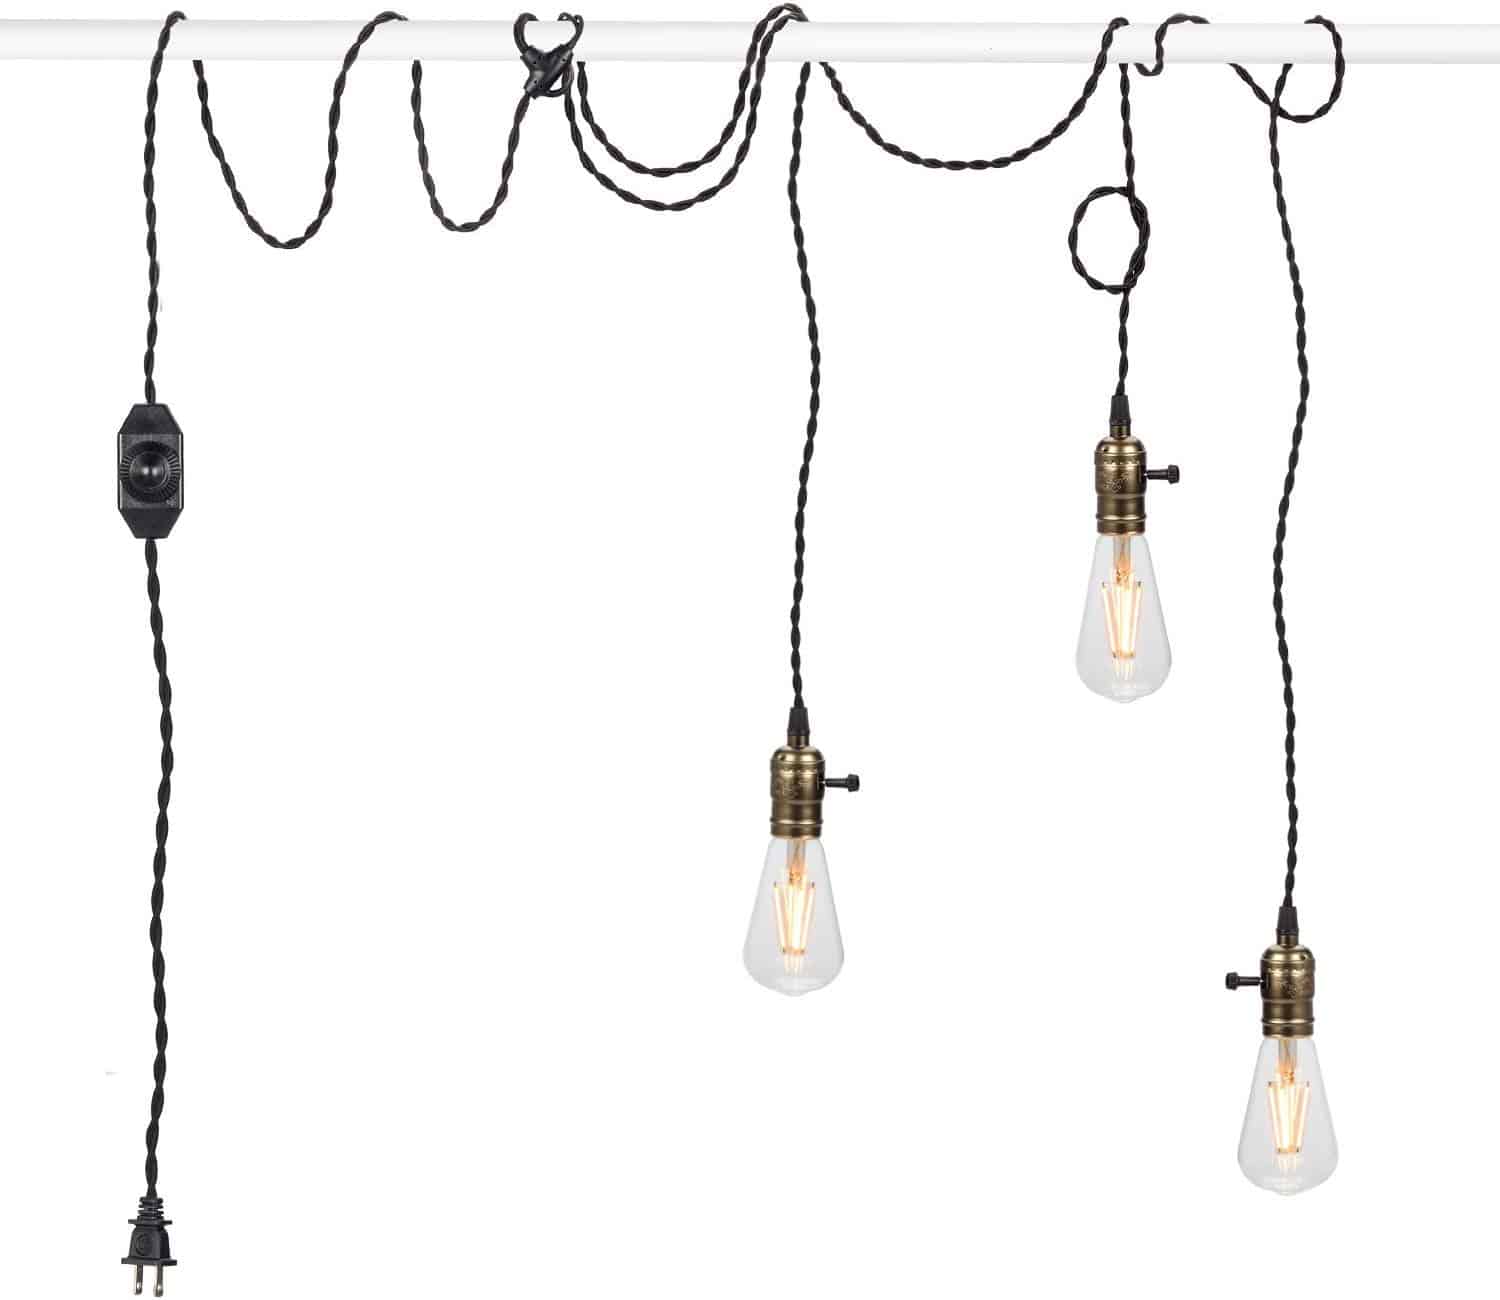 industrial-lamps-hanging